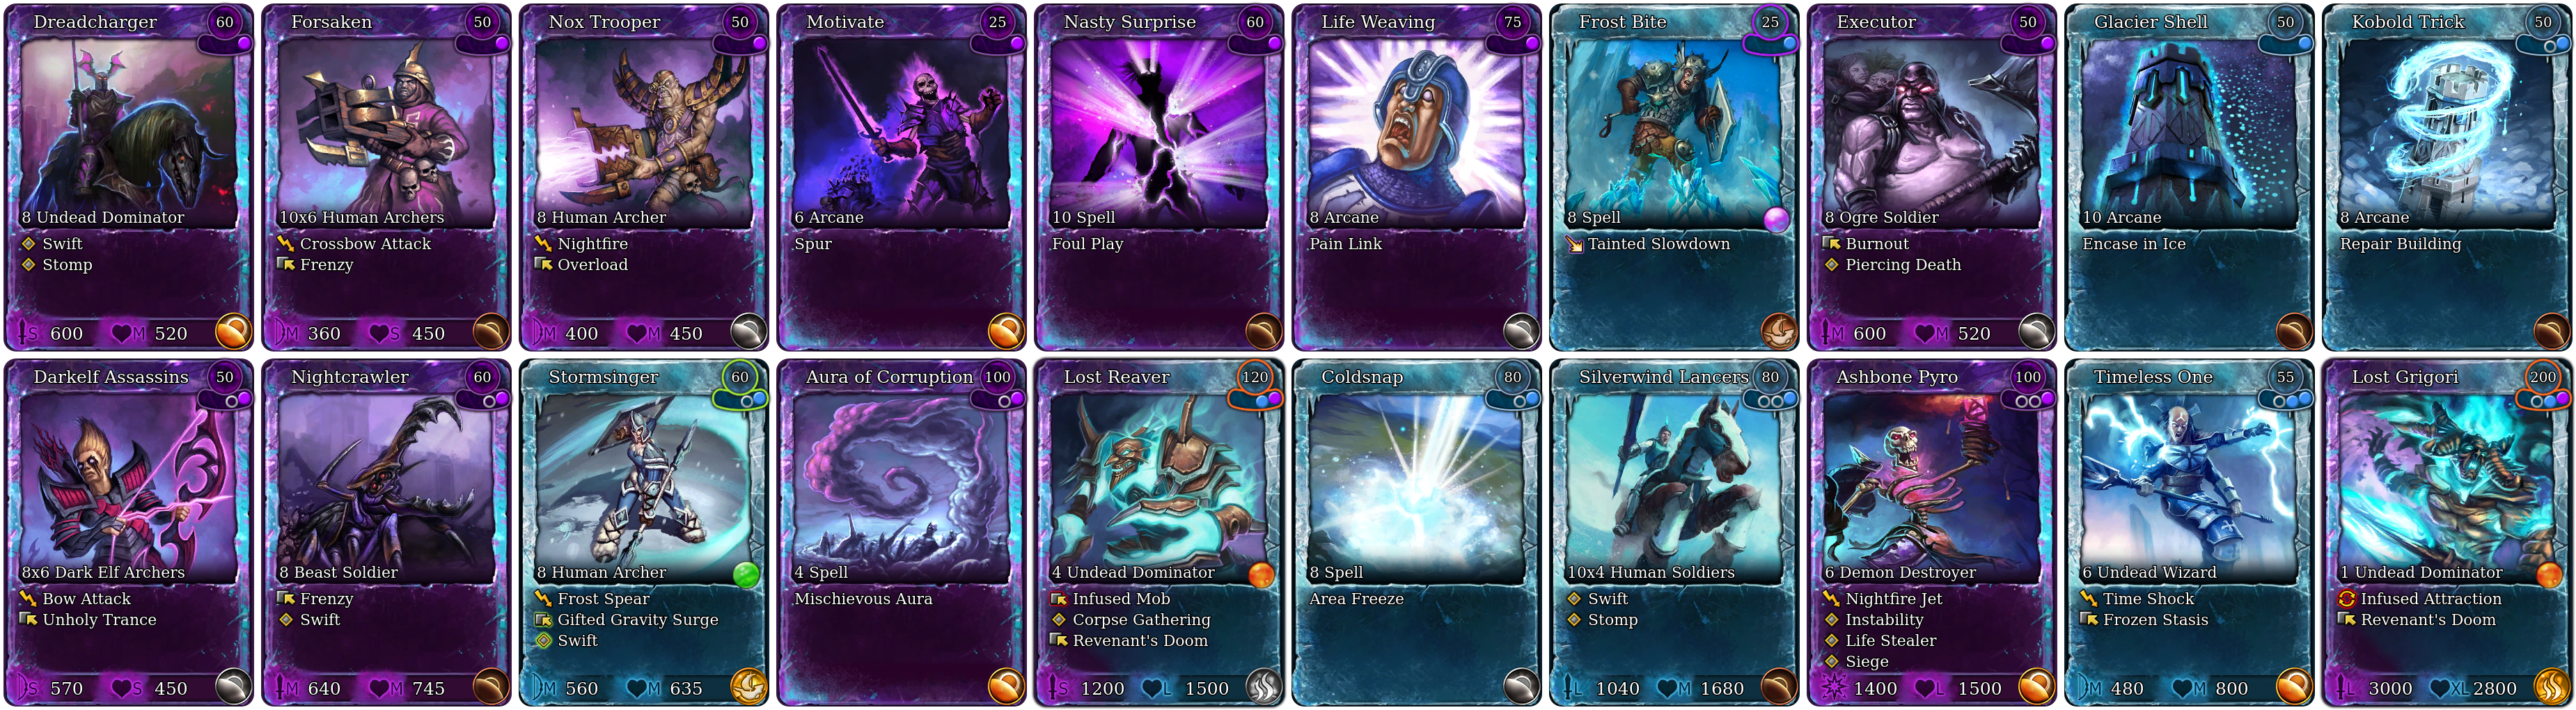 Divine Headgears, new PvP ladder Rewards, new card for Raids and more! -  Updates - Forsaken Ragnarok Online Forums